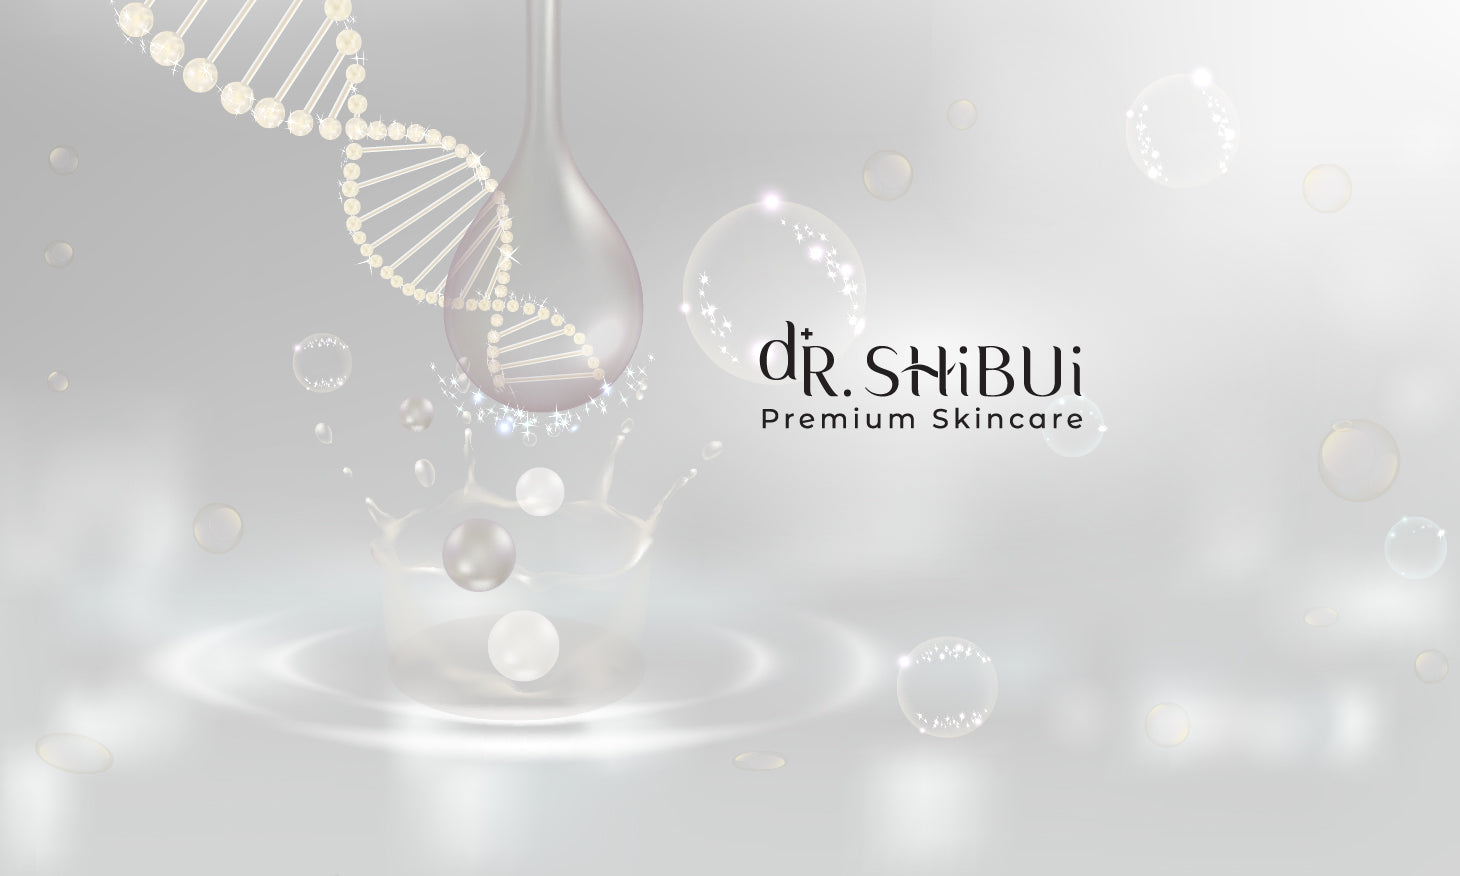 Dr. Shibui